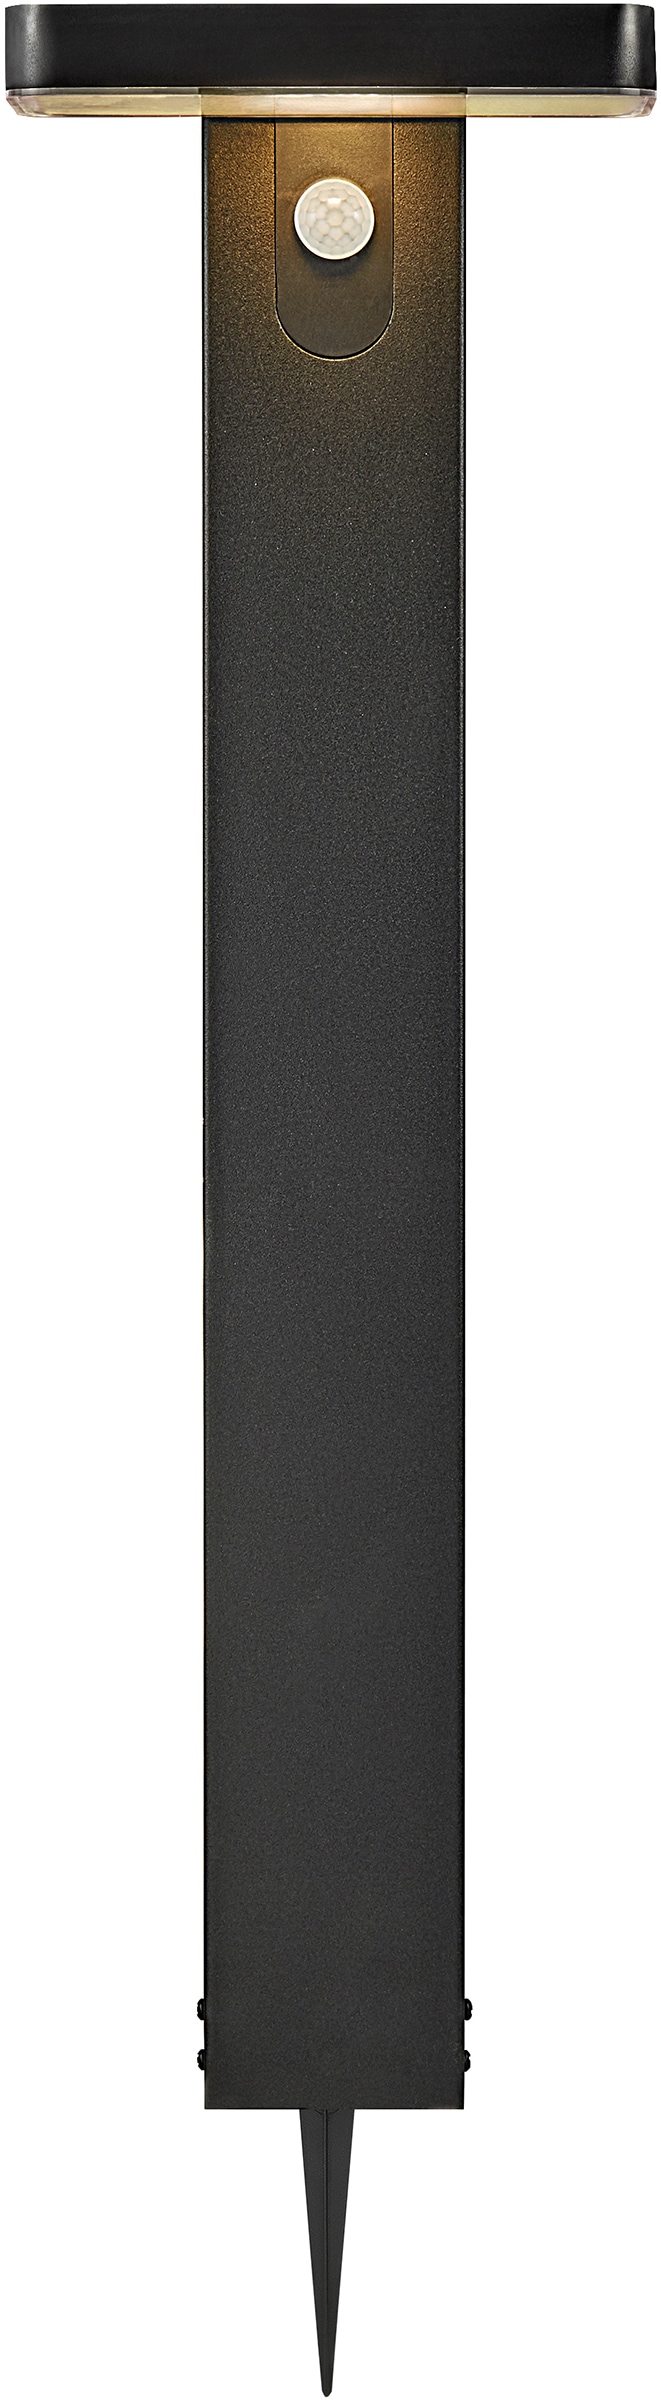 KONSTSMIDE LED Laterne »Portofino«, PortofinoLED bestellen BAUR schwarz, dimmbar, Solar/USB-Laterne Dammerungs 